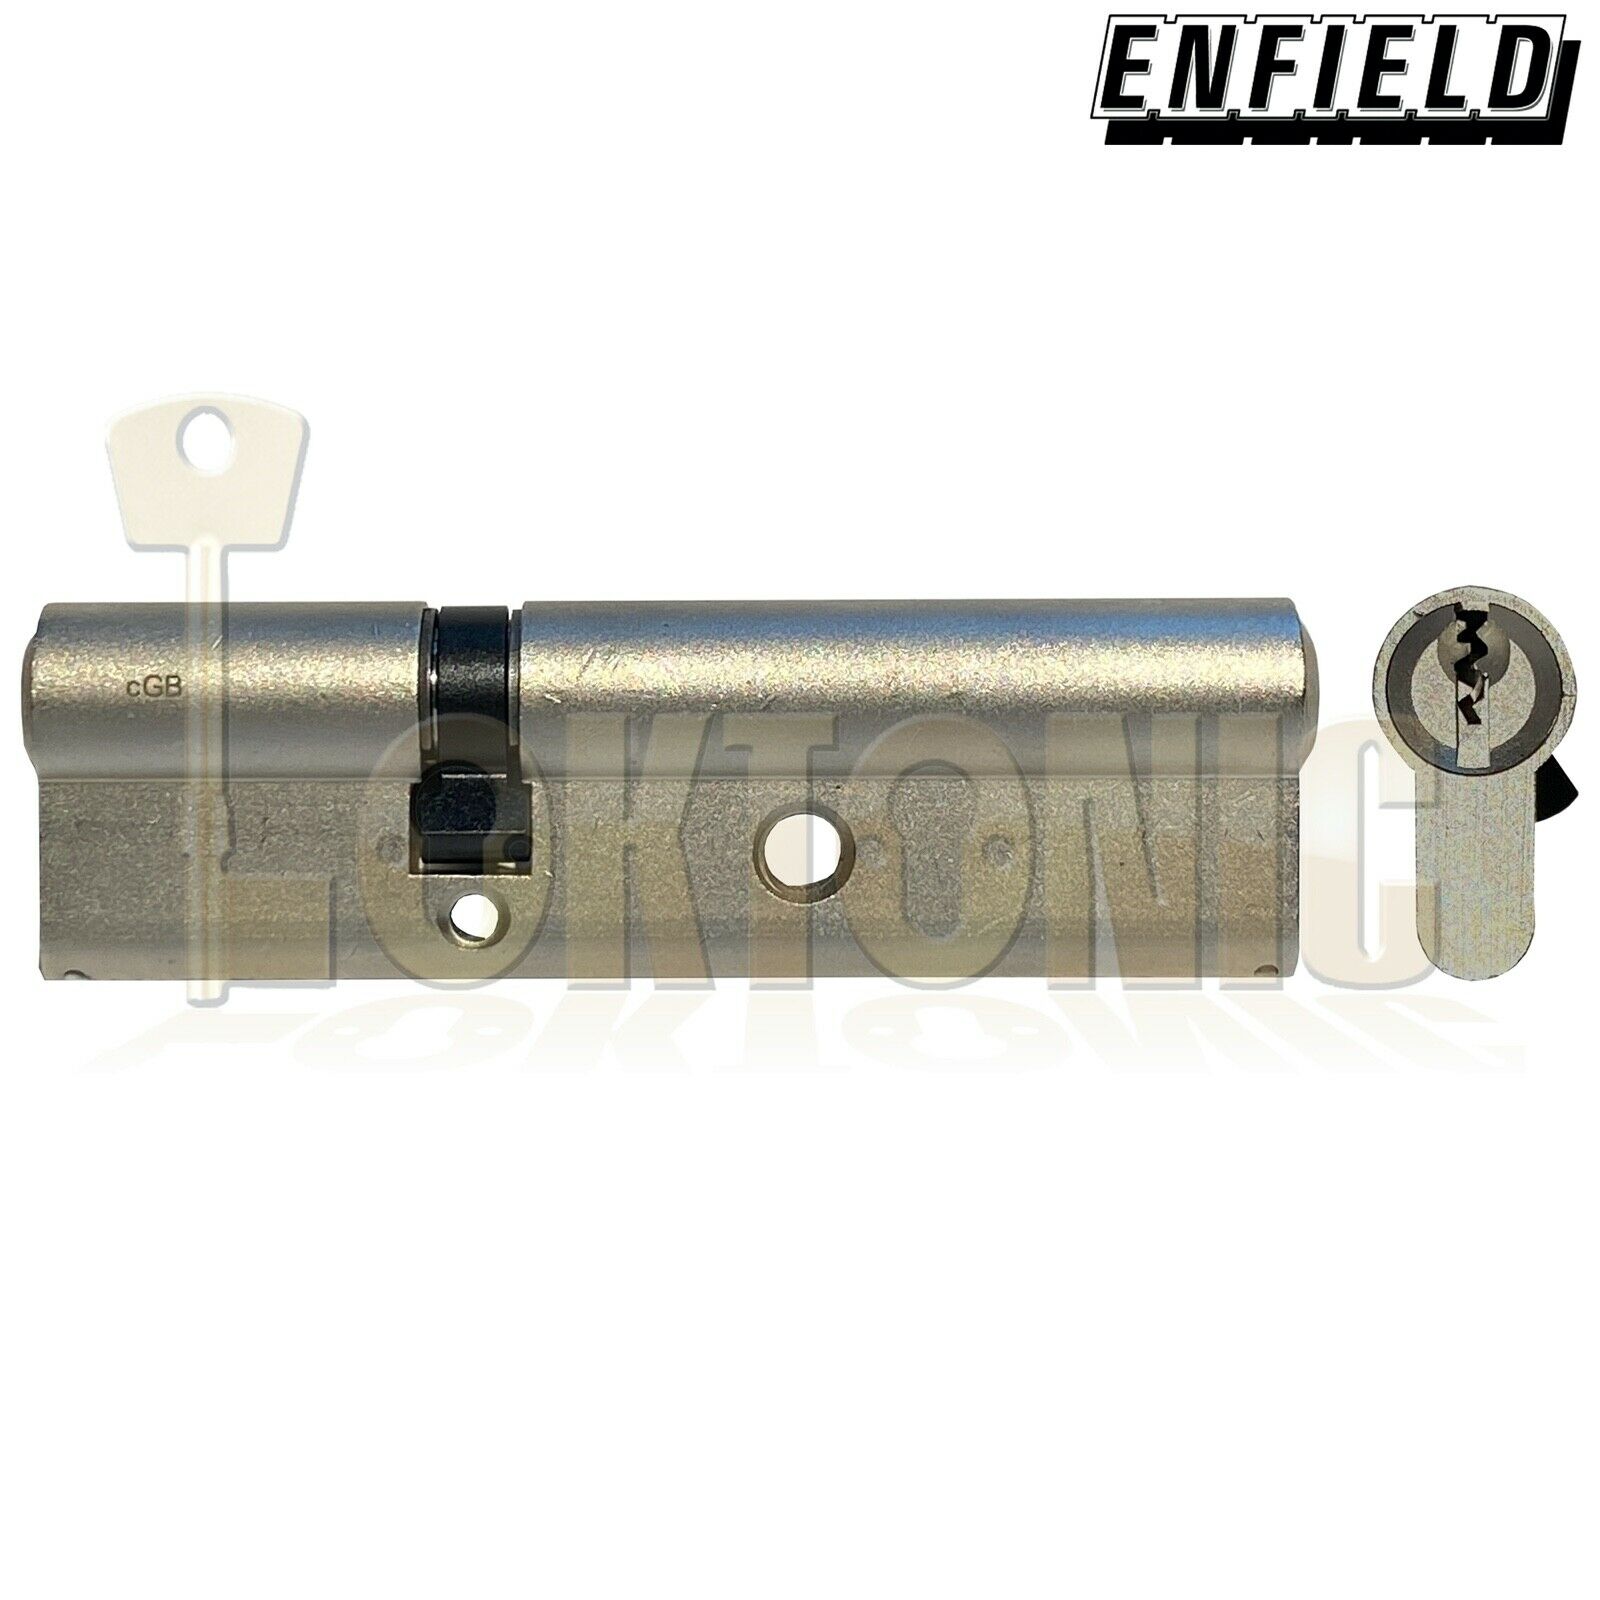 Enfield 6 PIN HX Contract Banham L111 Type Nightlatch Euro Double Cylinder Lock 